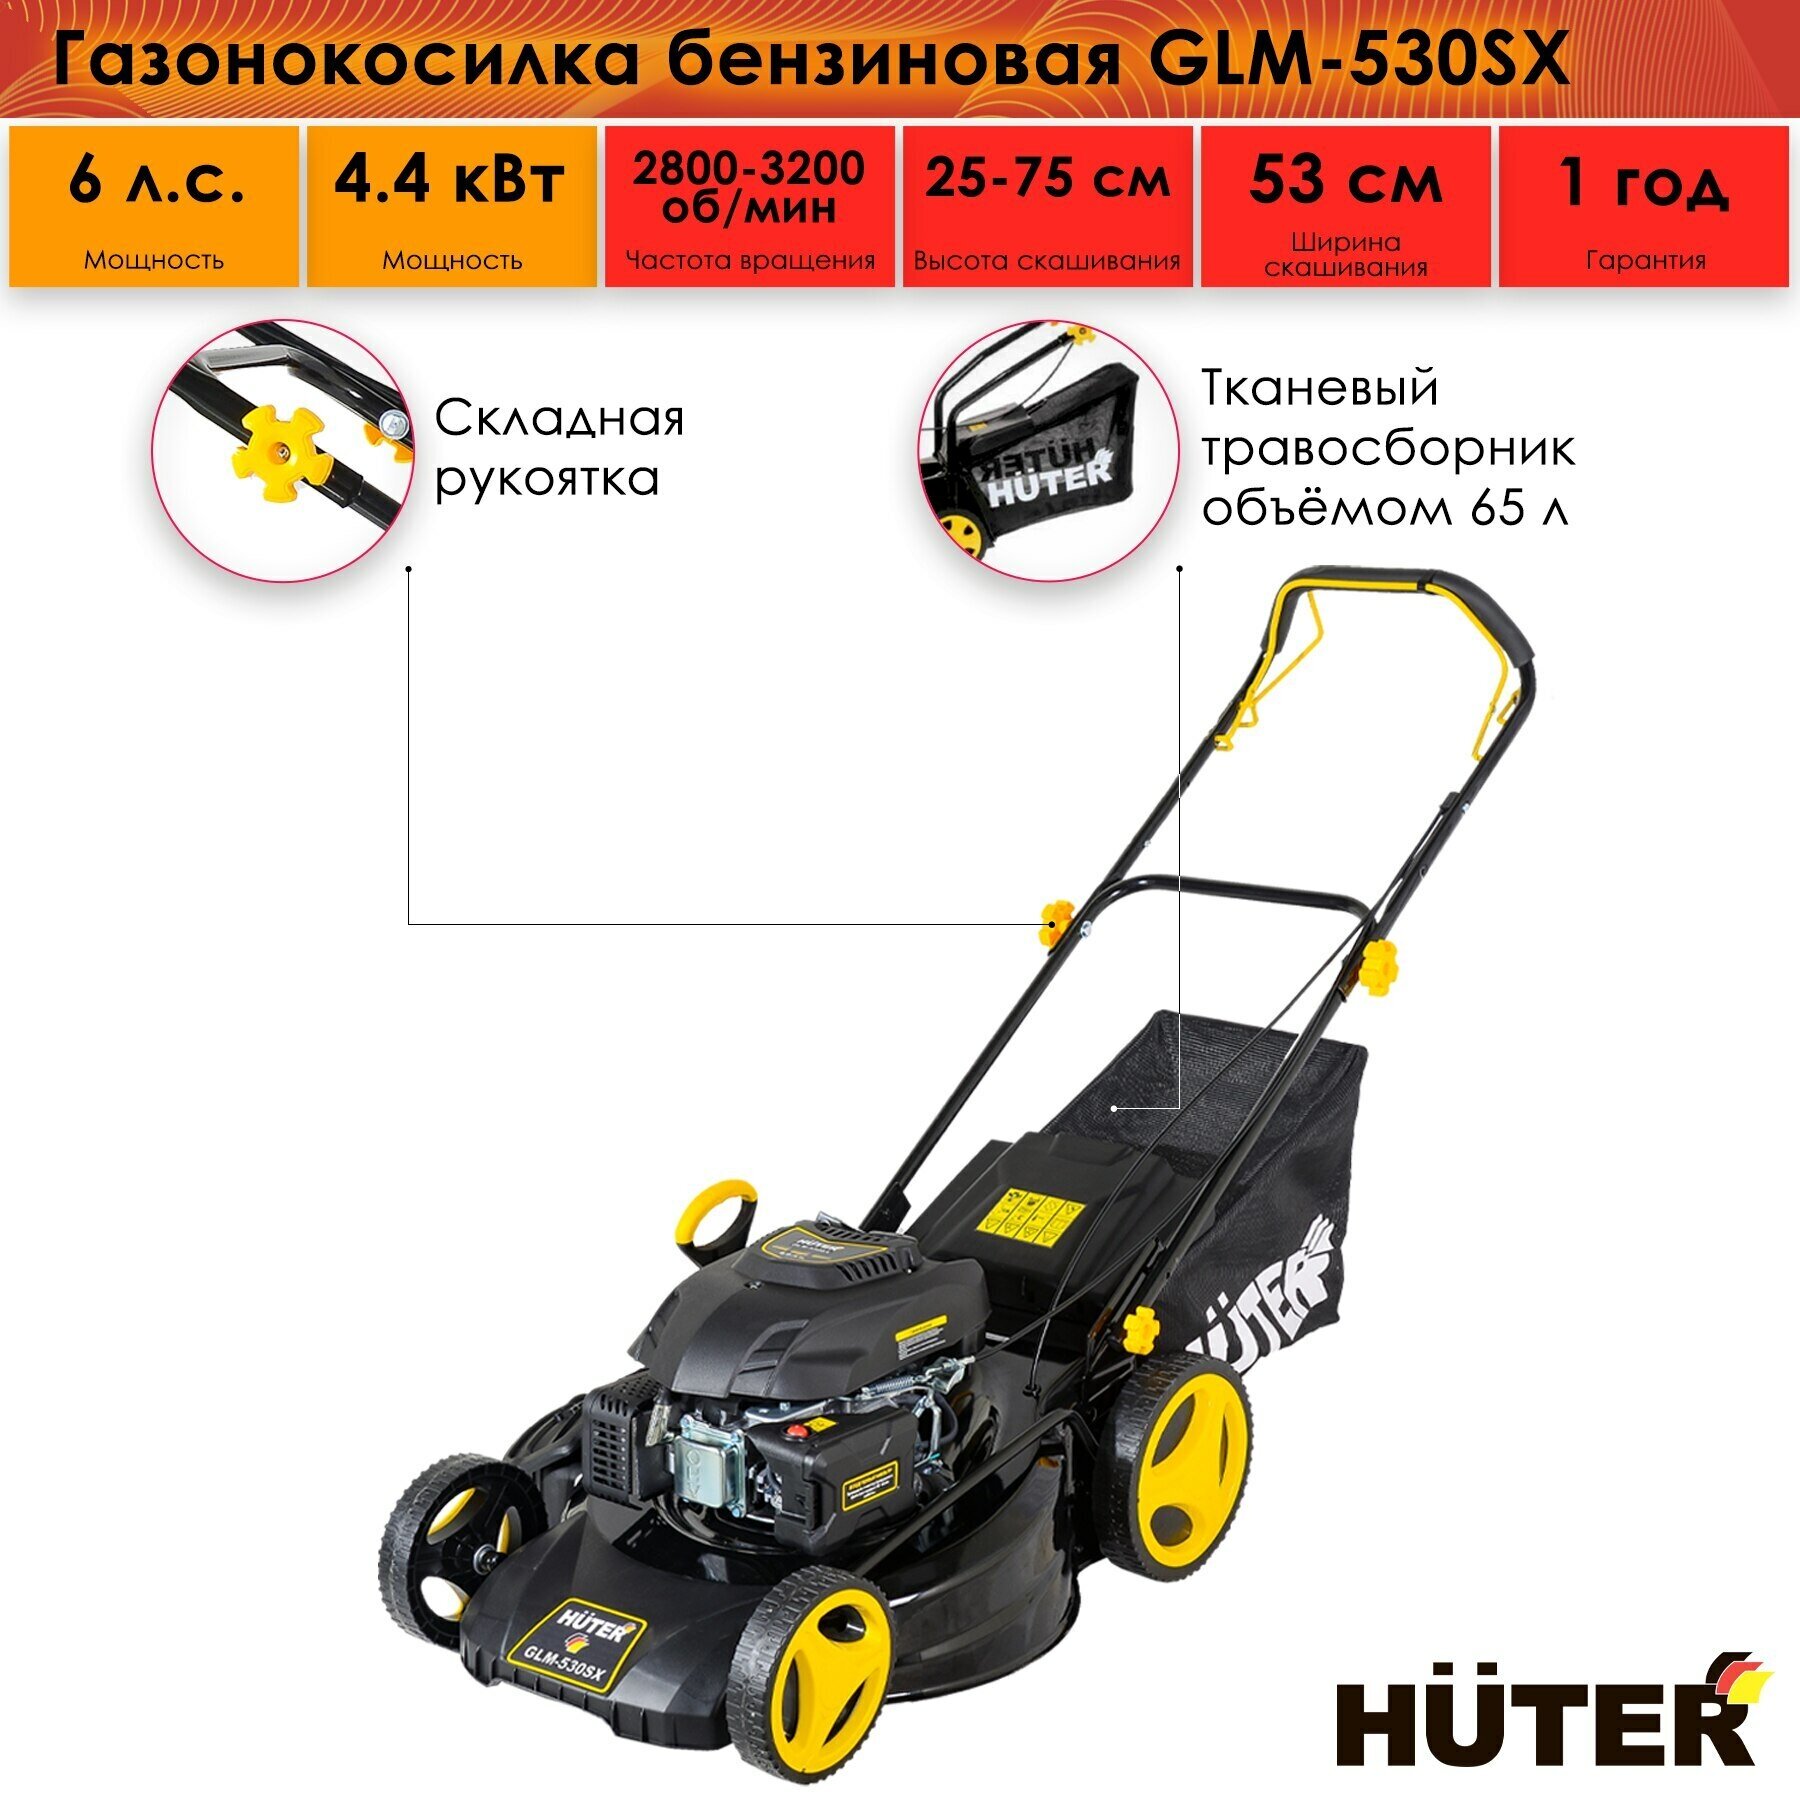 Бензиновая газонокосилка Huter GLM-530SX, 6 л. с, 2800-3200 об/мин